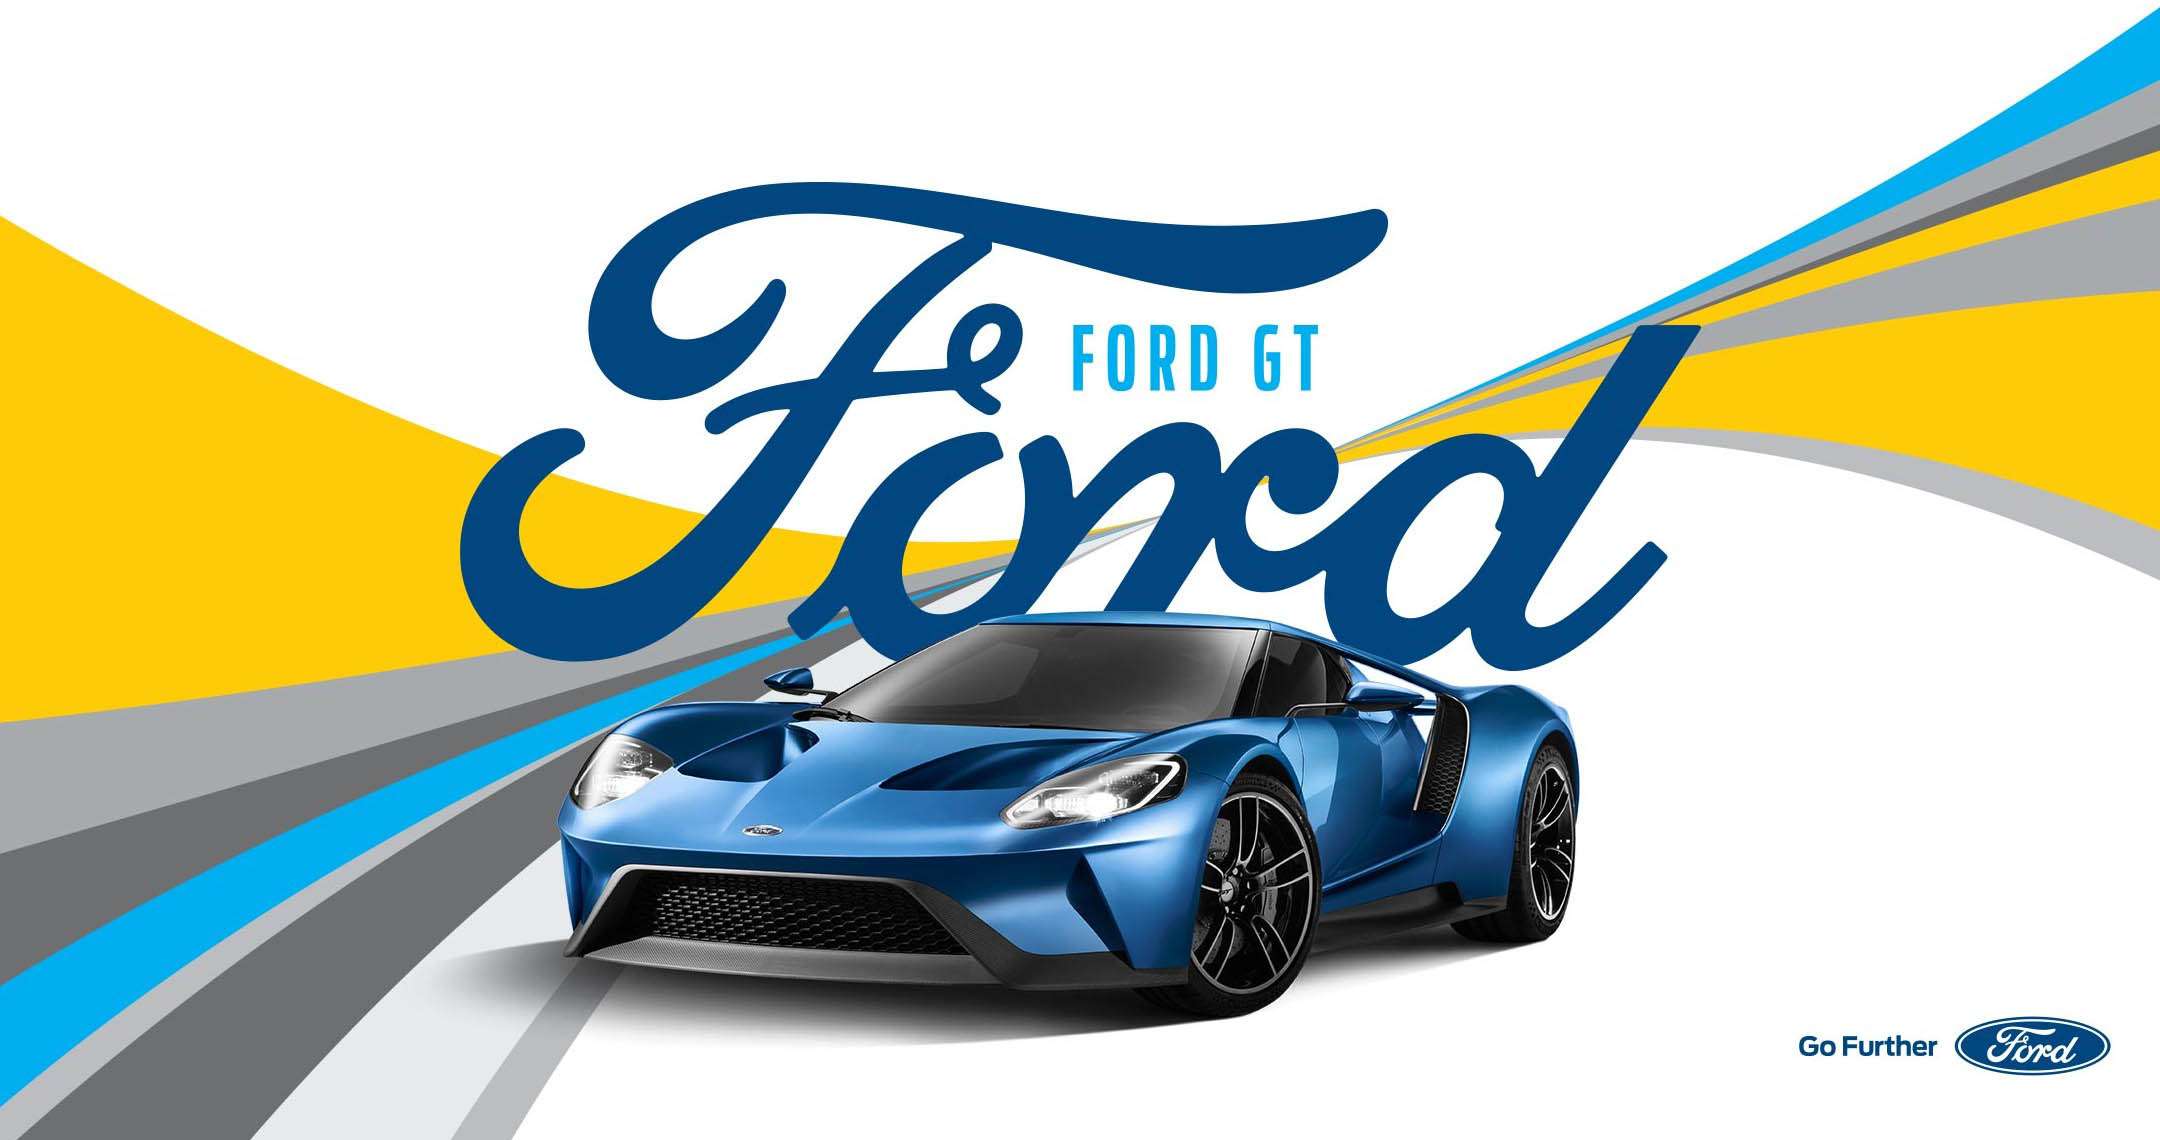 Ford GT Logo - GT Supercar. me.ford.com